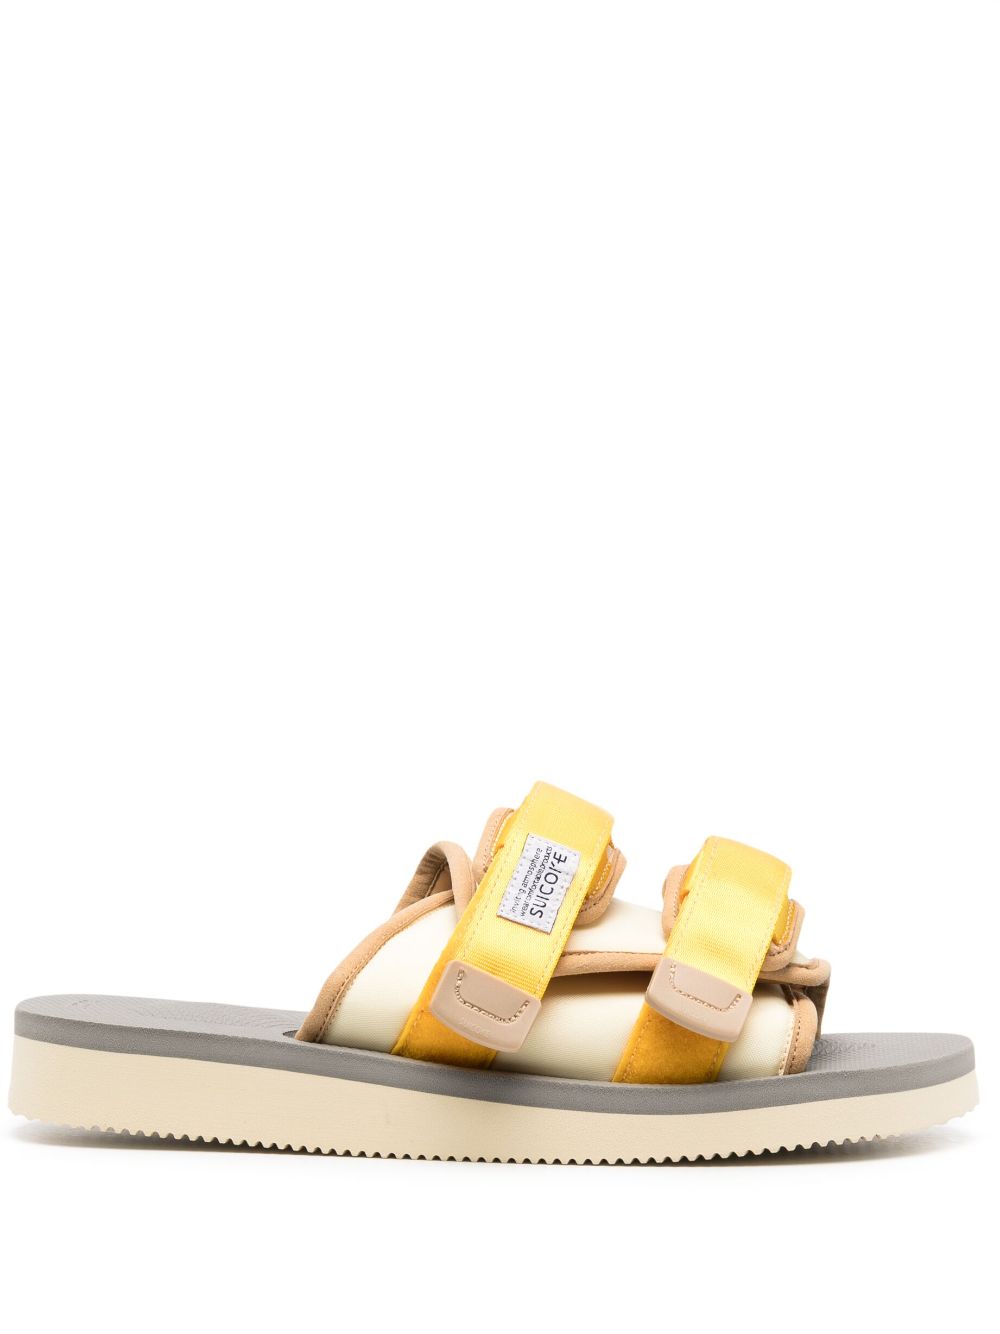 Suicoke MOTO-VPO open-toe sandals - Yellow